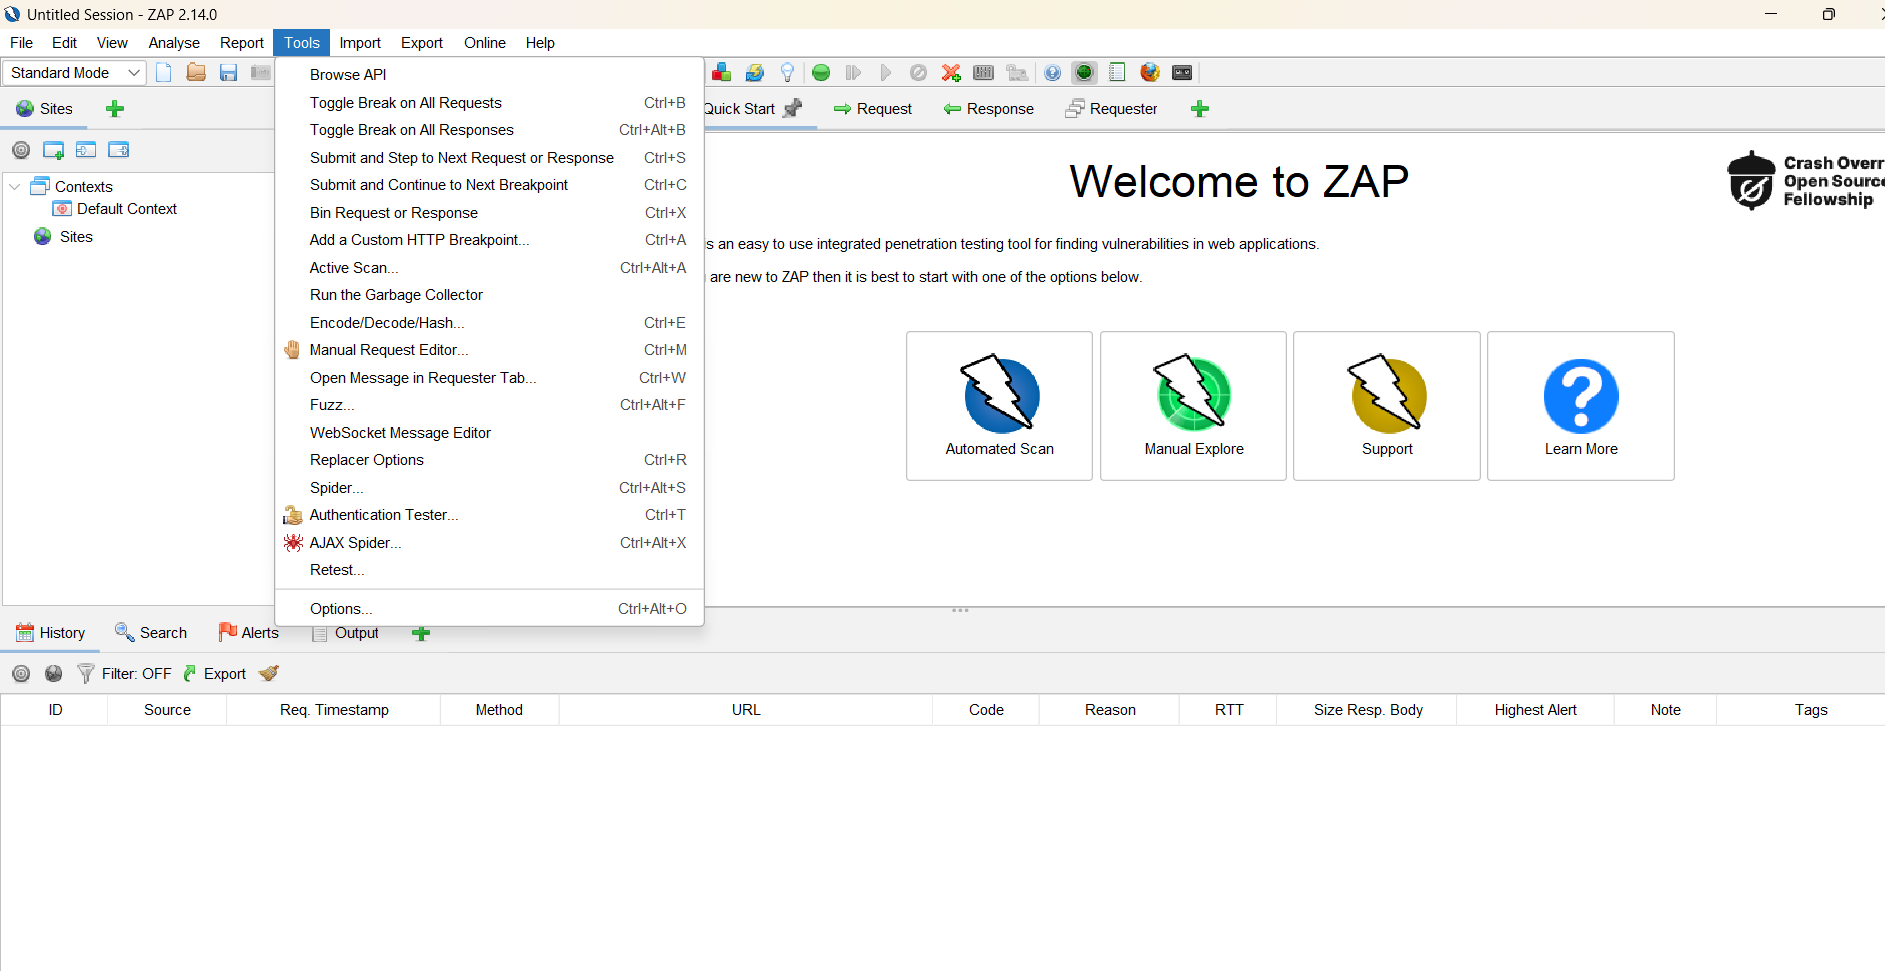 Image of ZAP Dashboard